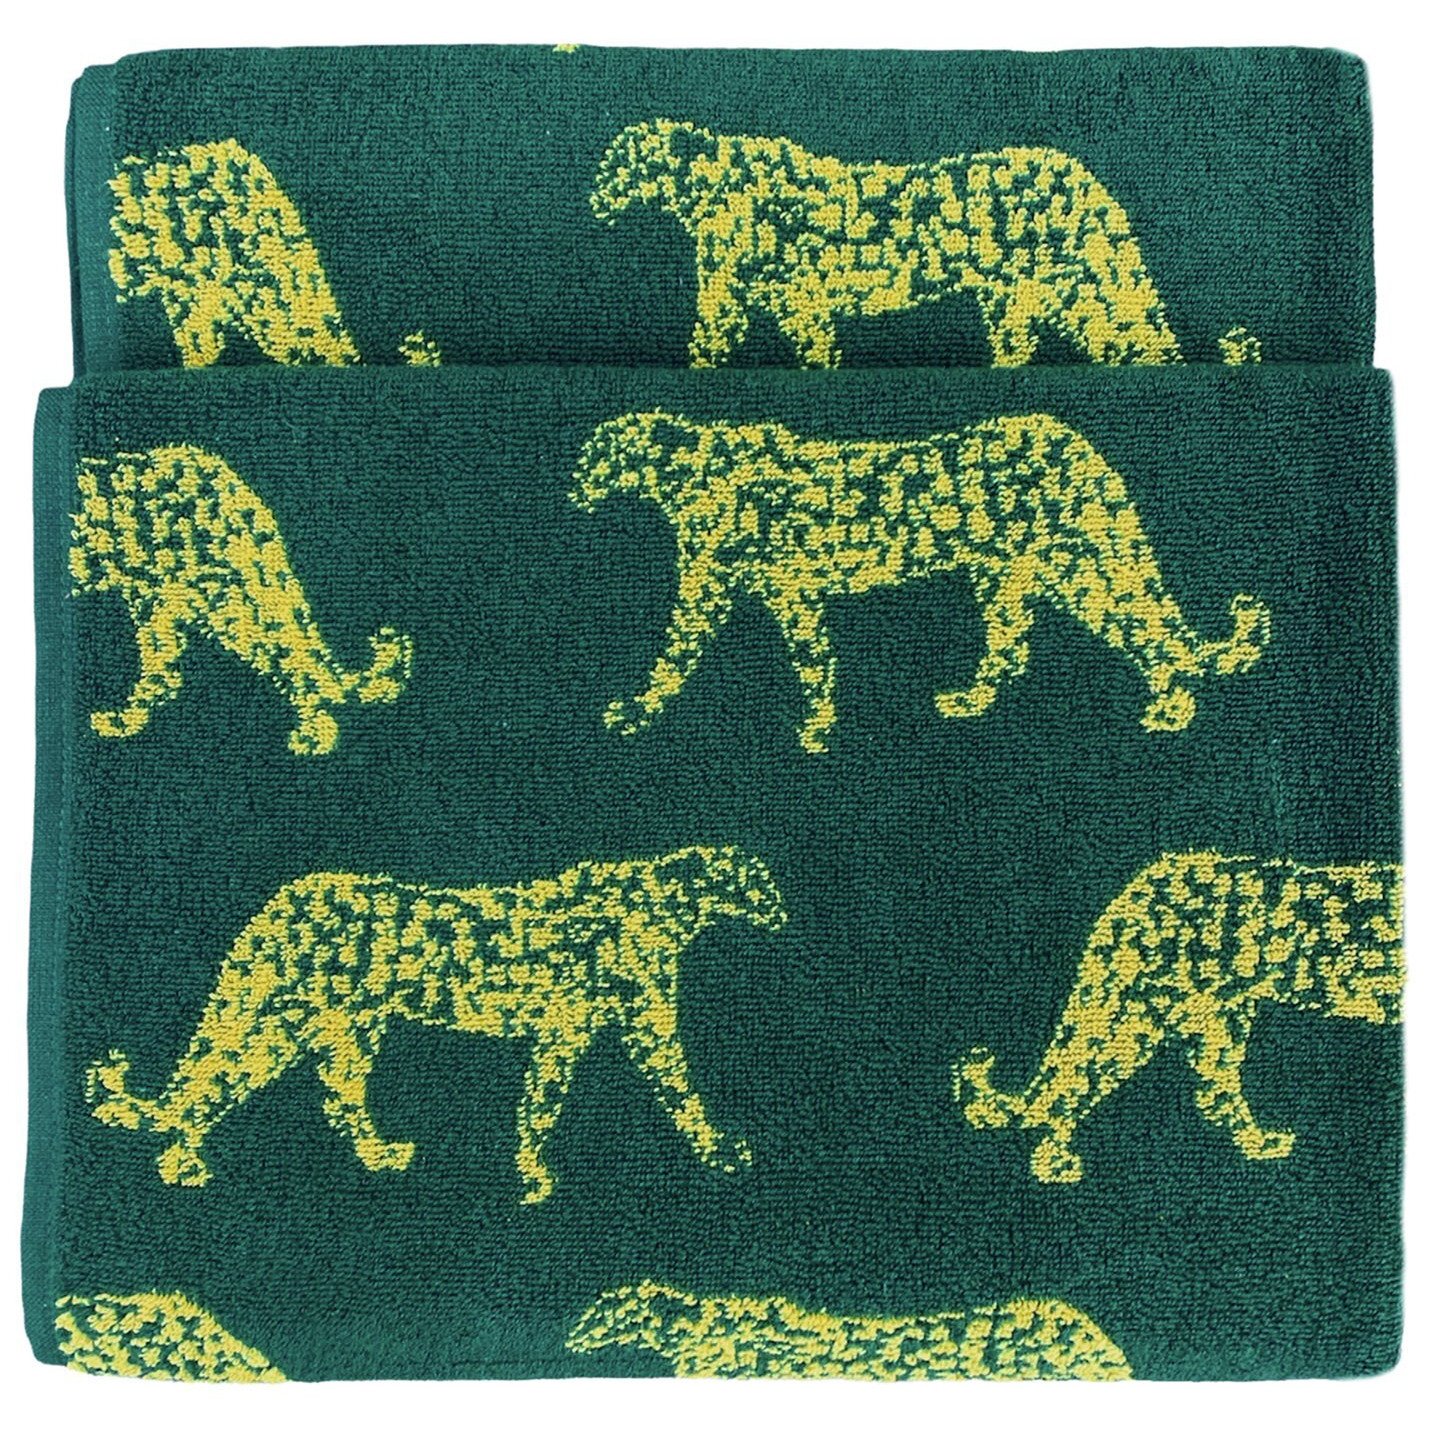 Furn Turkish Cotton Leopard Patterned Bath Towel -Teal Green - image 1